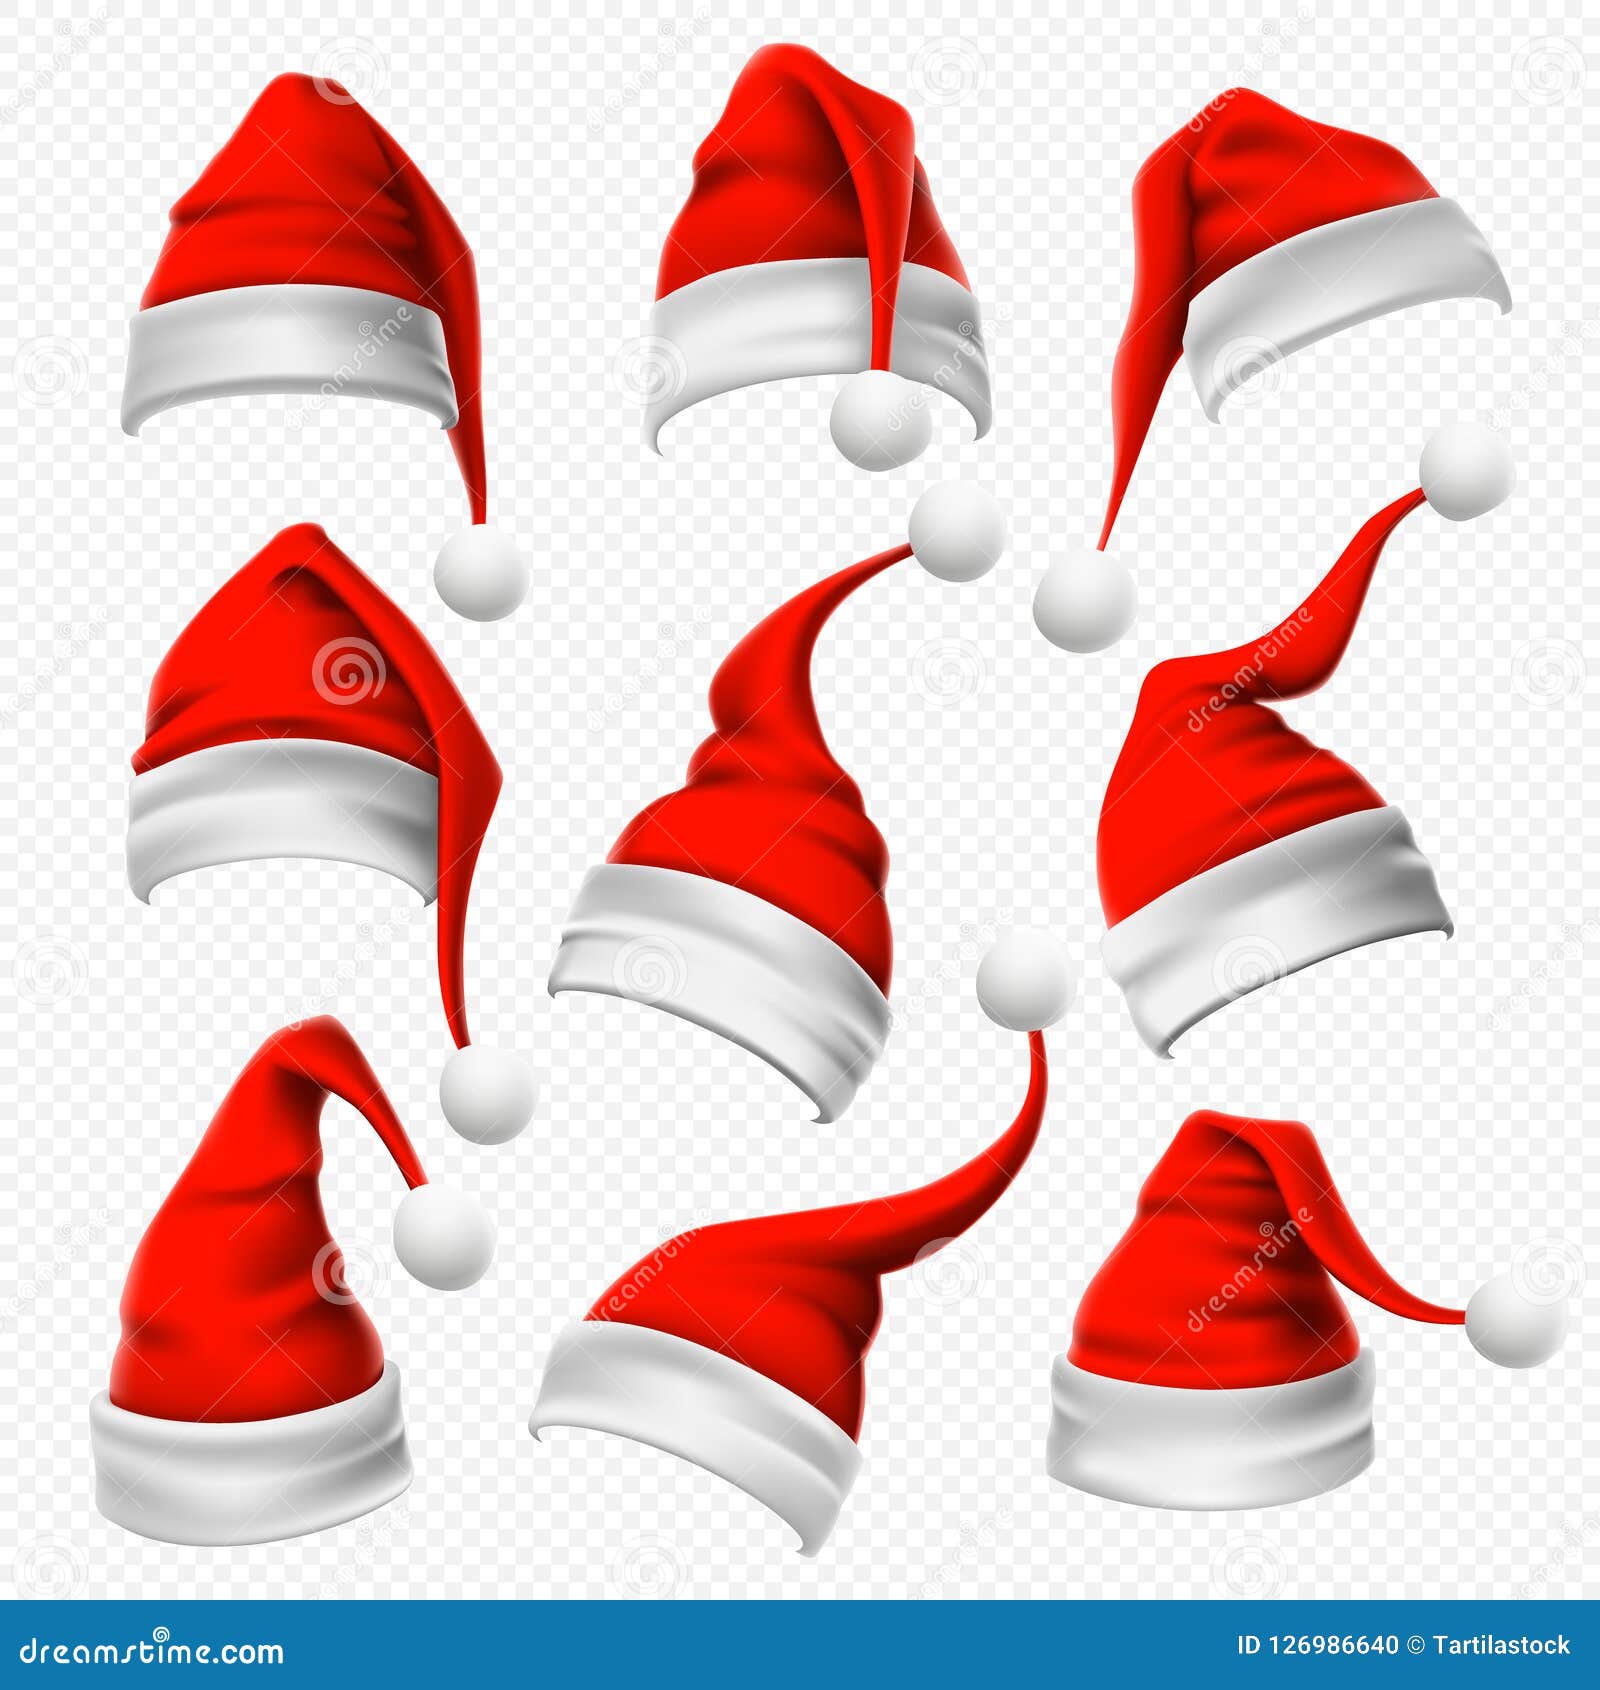 santa claus hats. christmas red hat, xmas furry headdress and winter holidays head wear decoration 3d  set